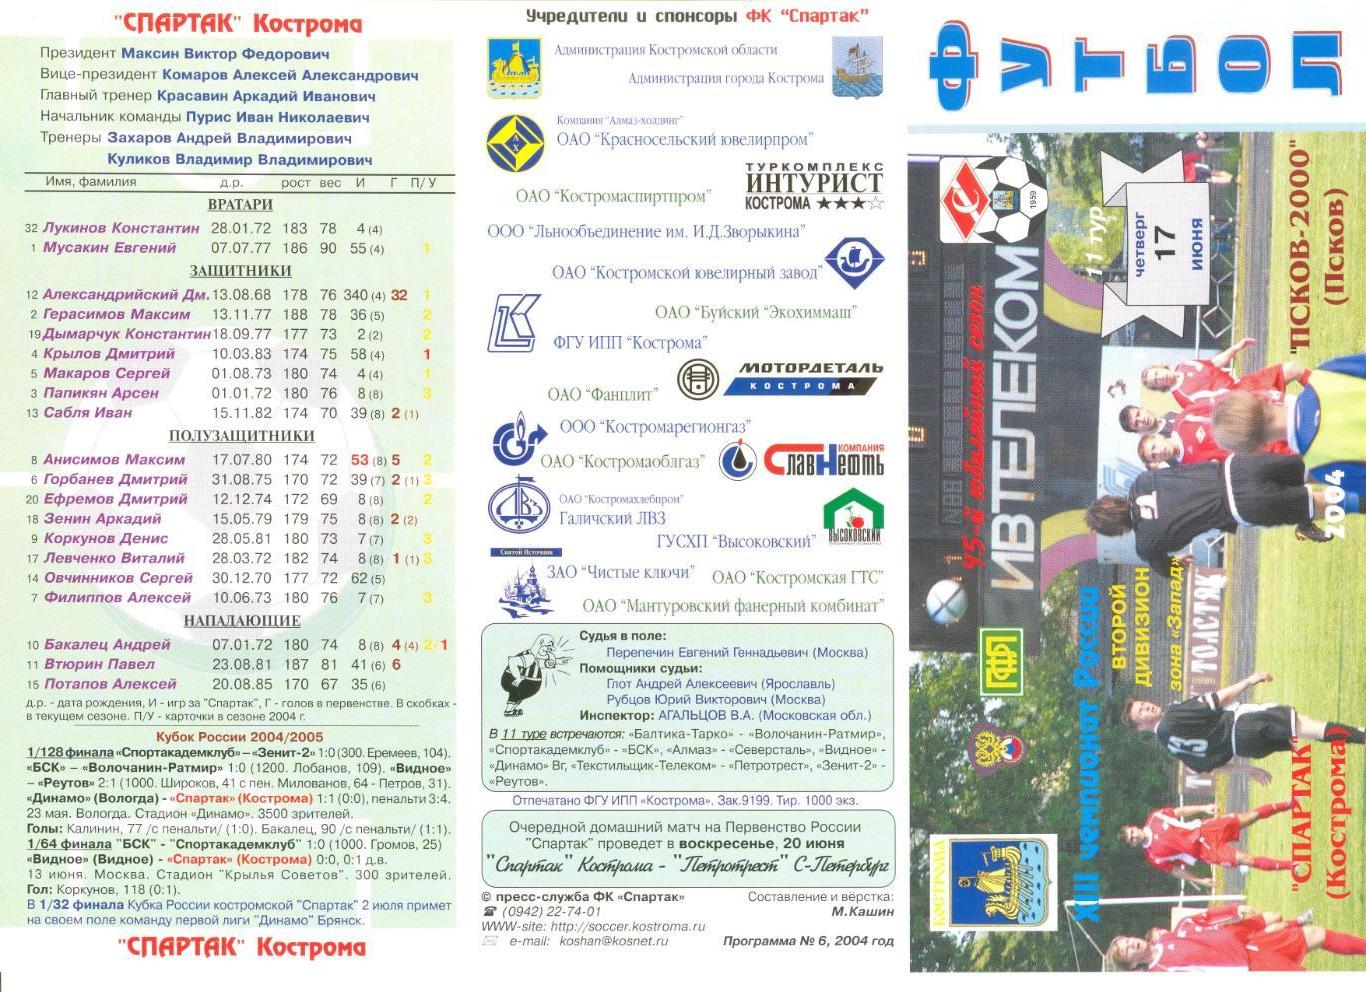 Спартак Кострома - Псков 2000 17.06.2004 г.